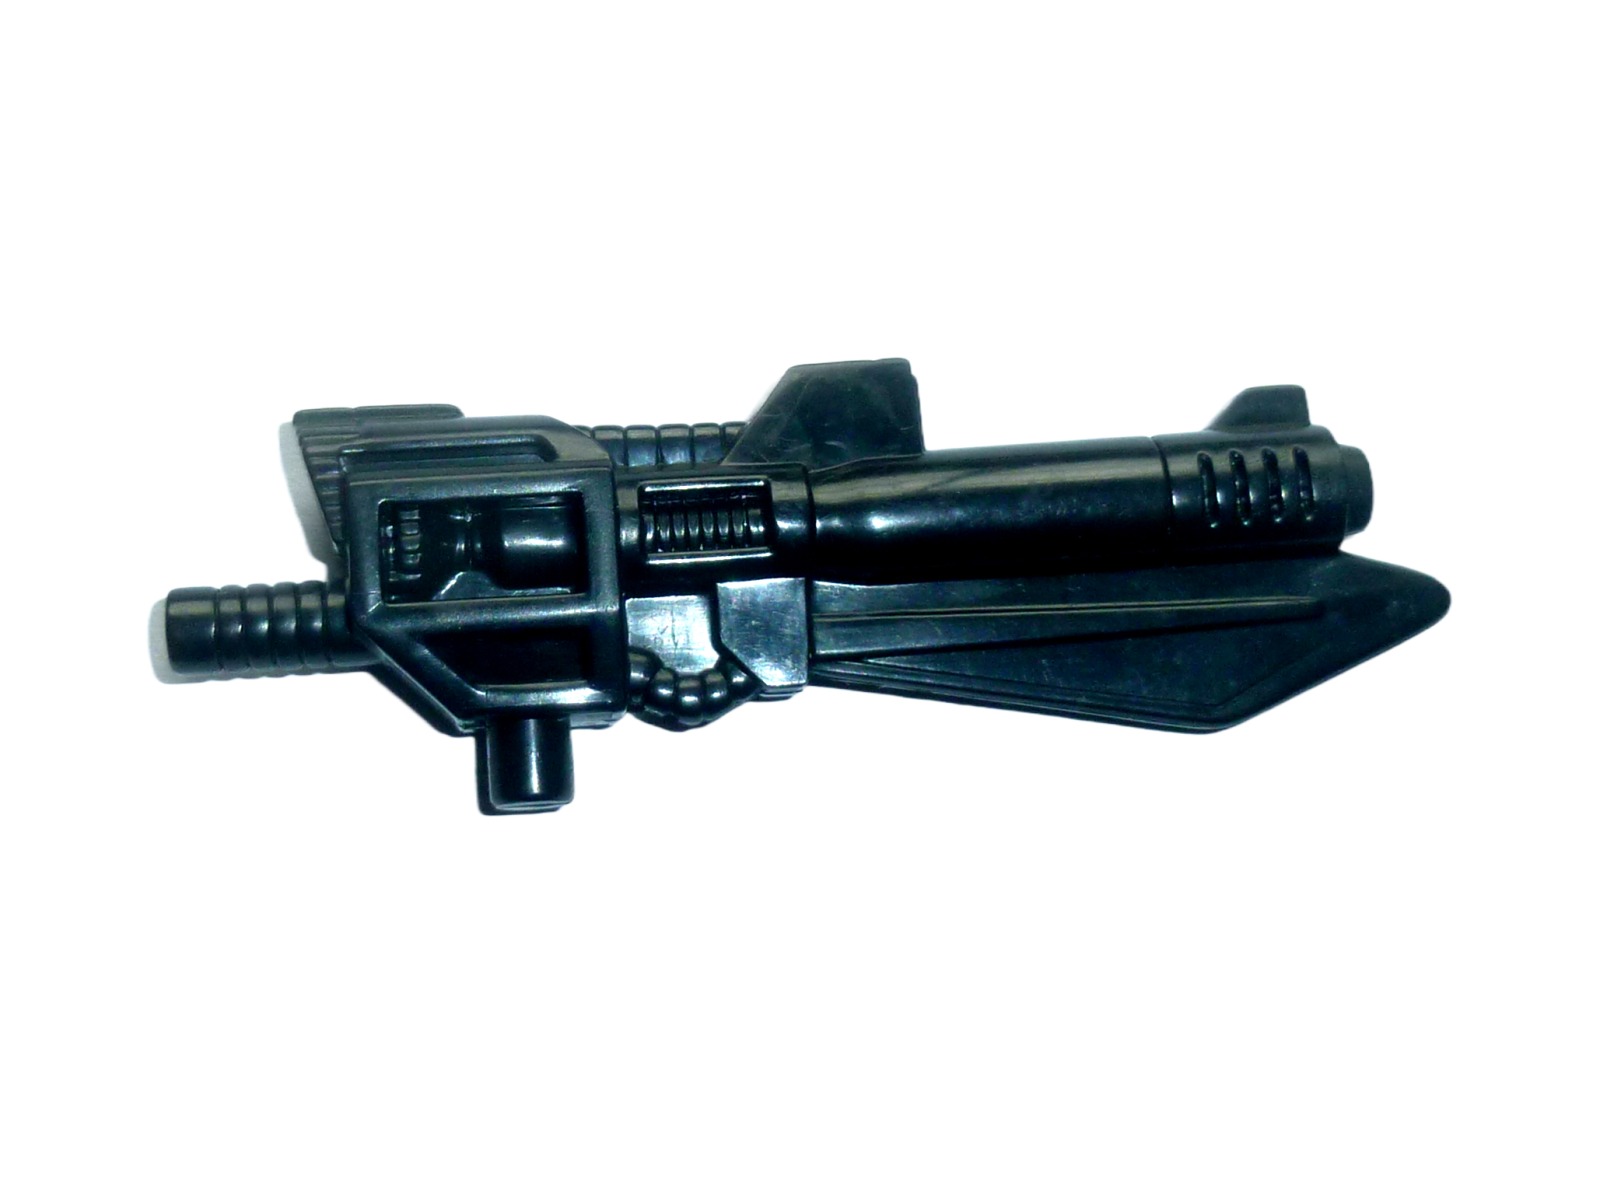 Grimlock - Cannon / Weapon / Sword Pretenders, Hasbro 1989